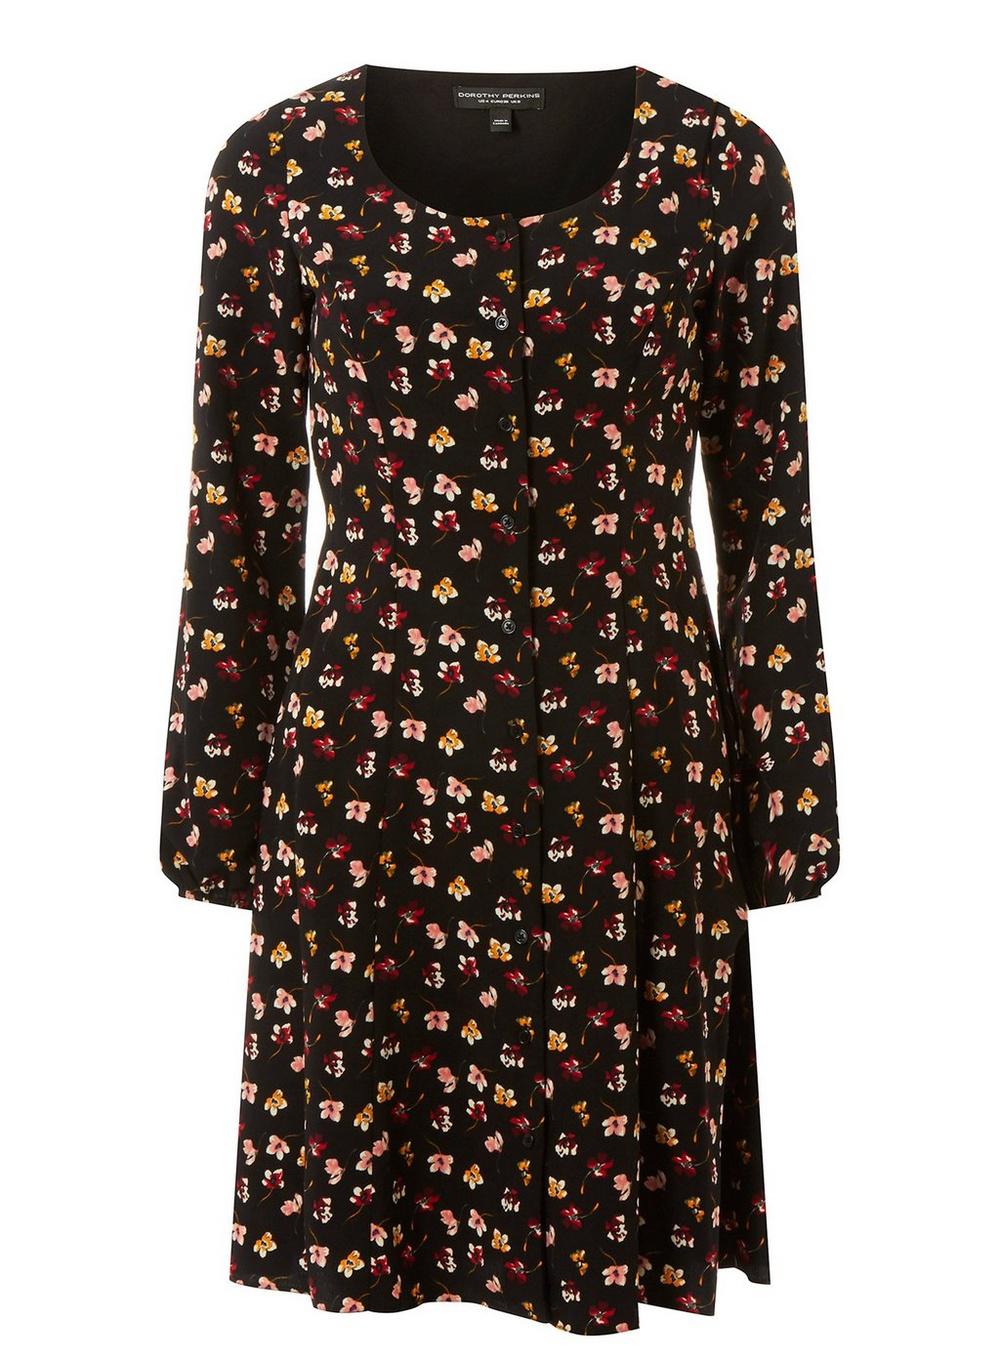 Lyst - Dorothy Perkins Black Floral Print Button Tea Dress in Black